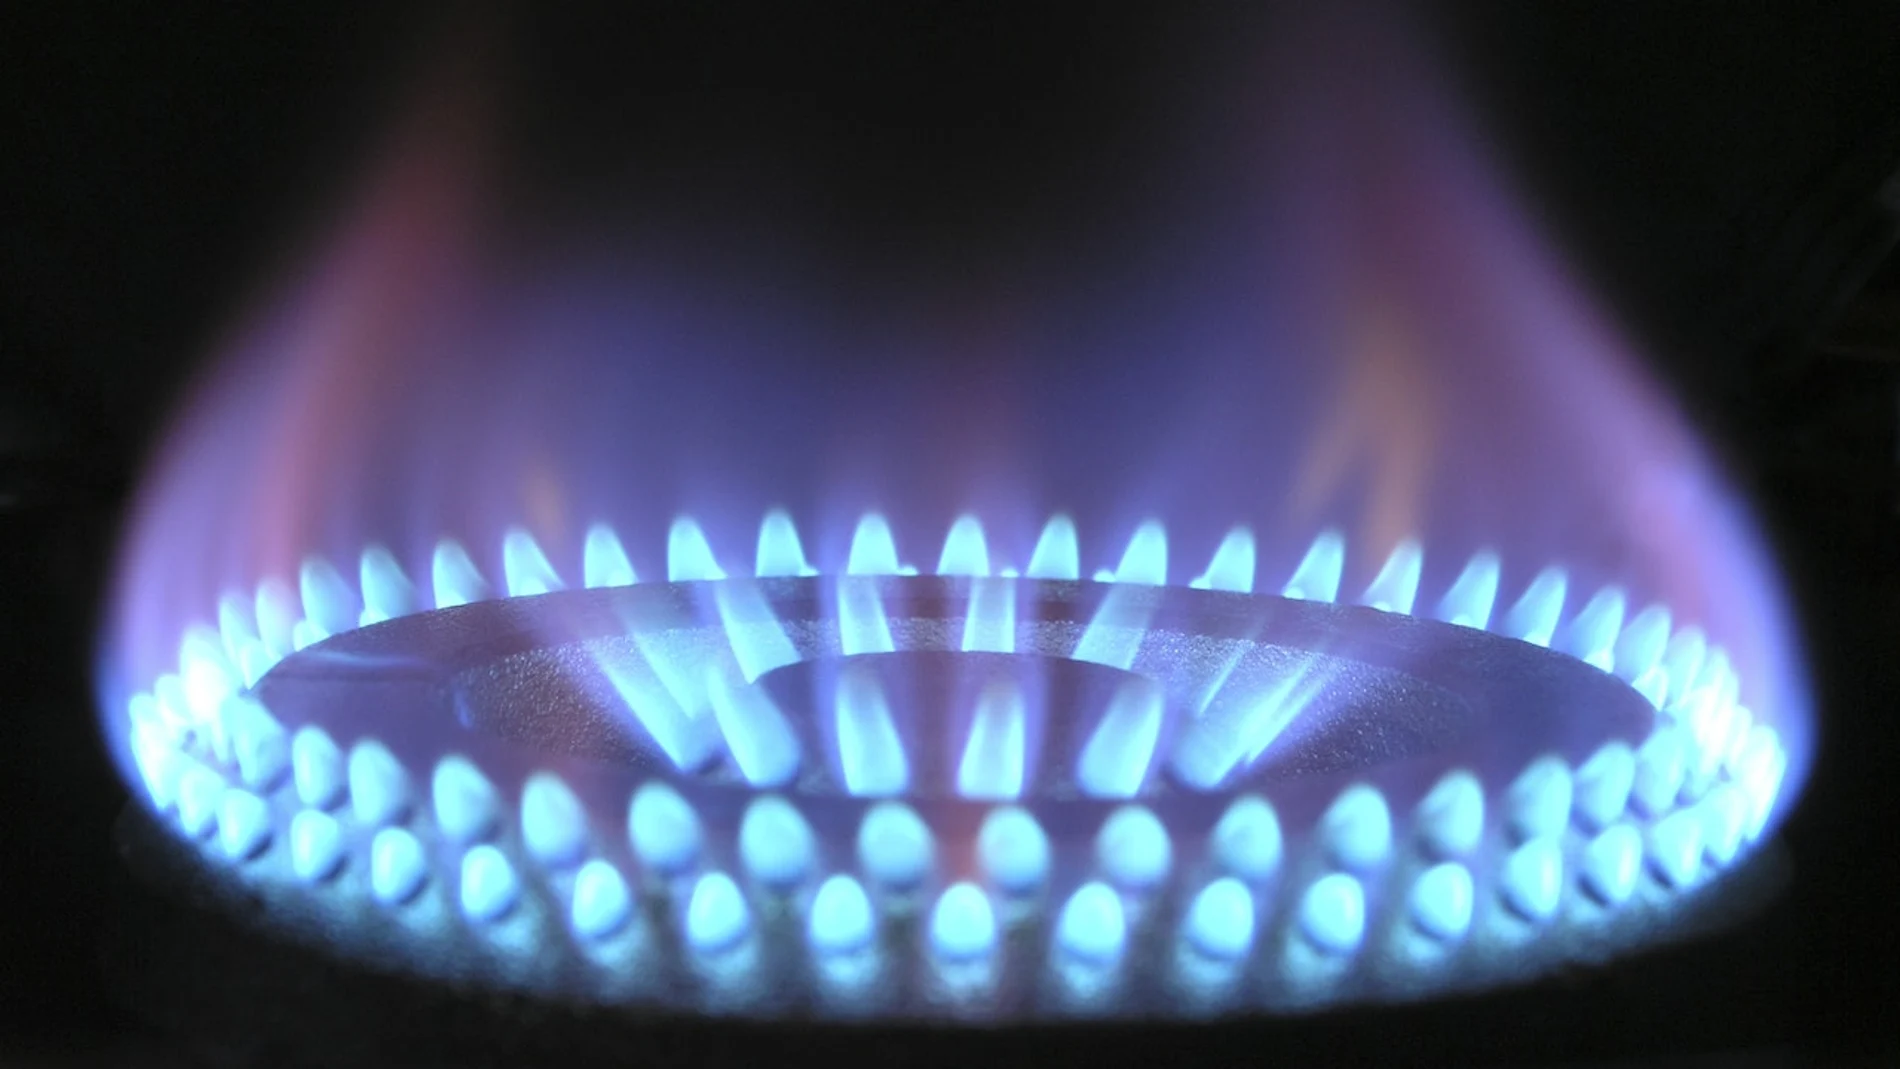 La rebaja del 21% al 5% del IVA del gas entró en vigor el 1 de octubre